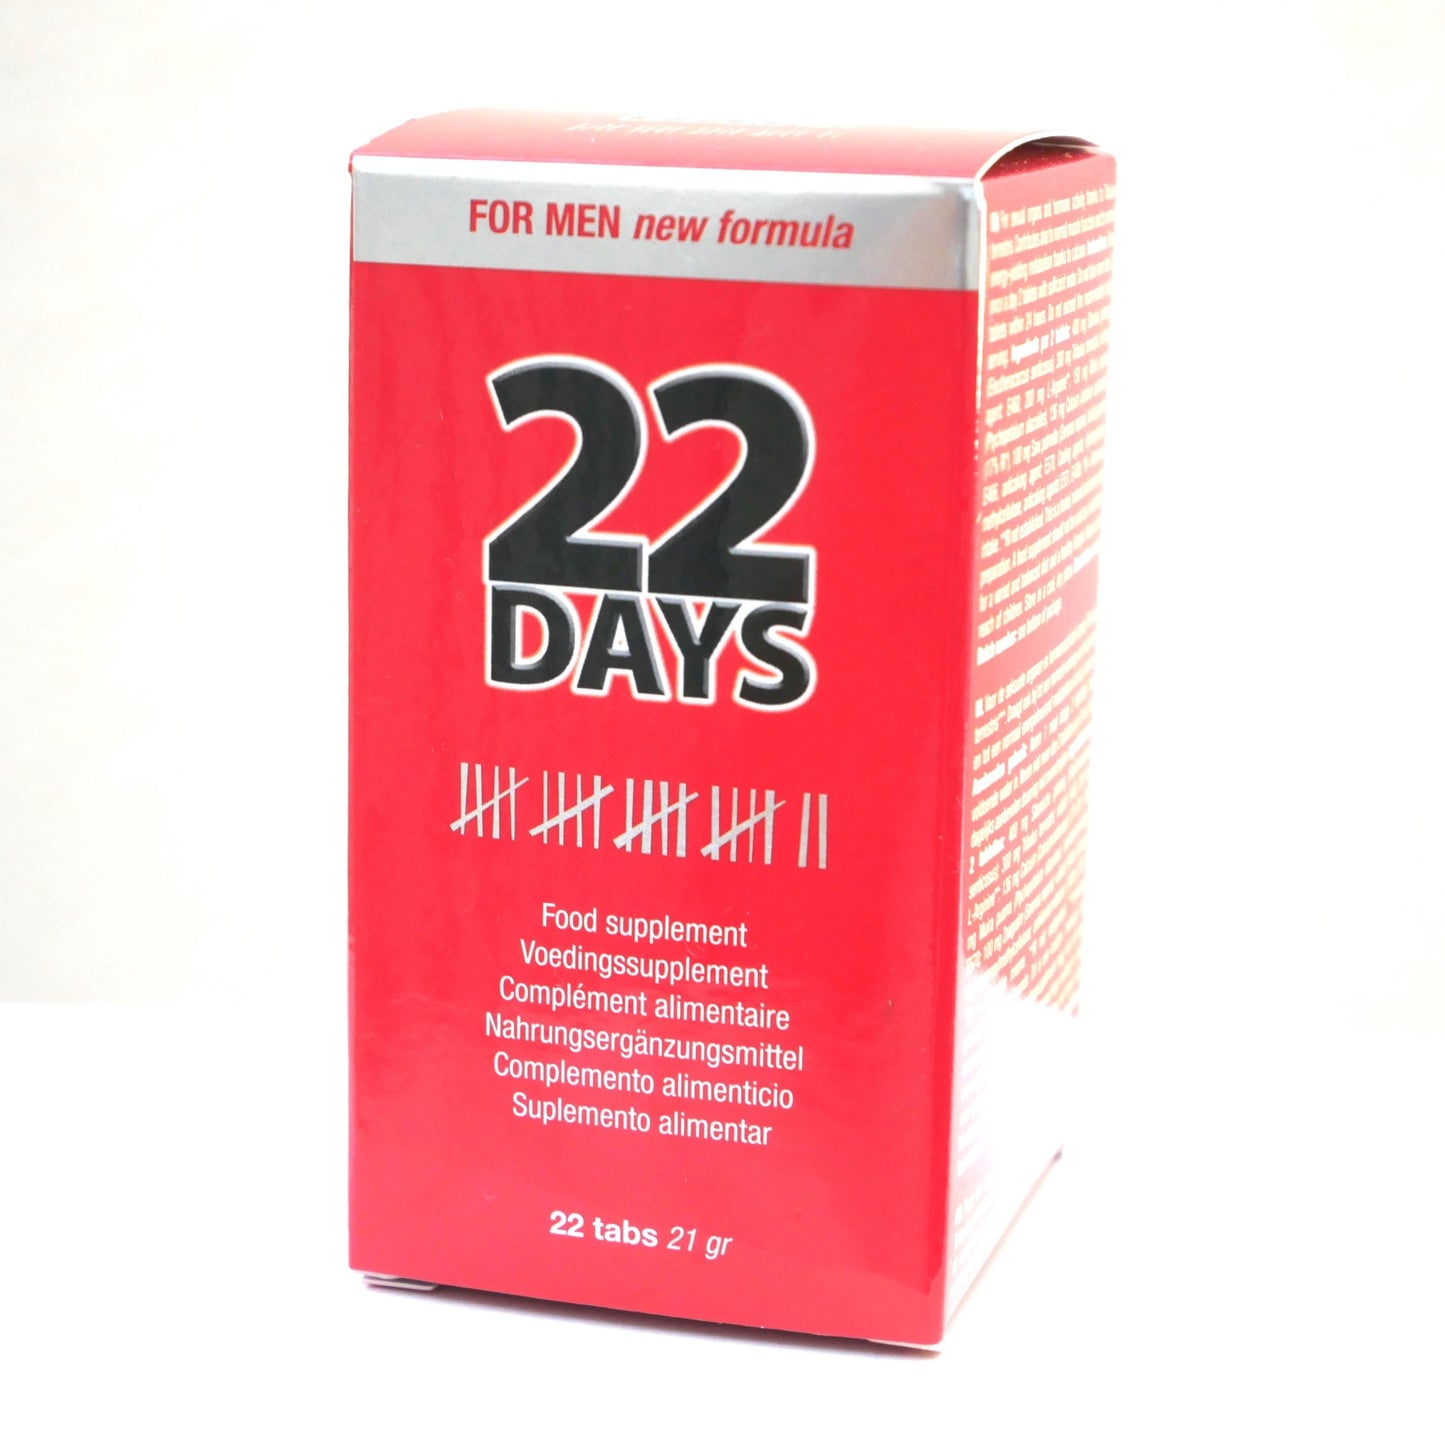 22 DAYS Cobeco Pills for men food supplement new formula 22 tabs